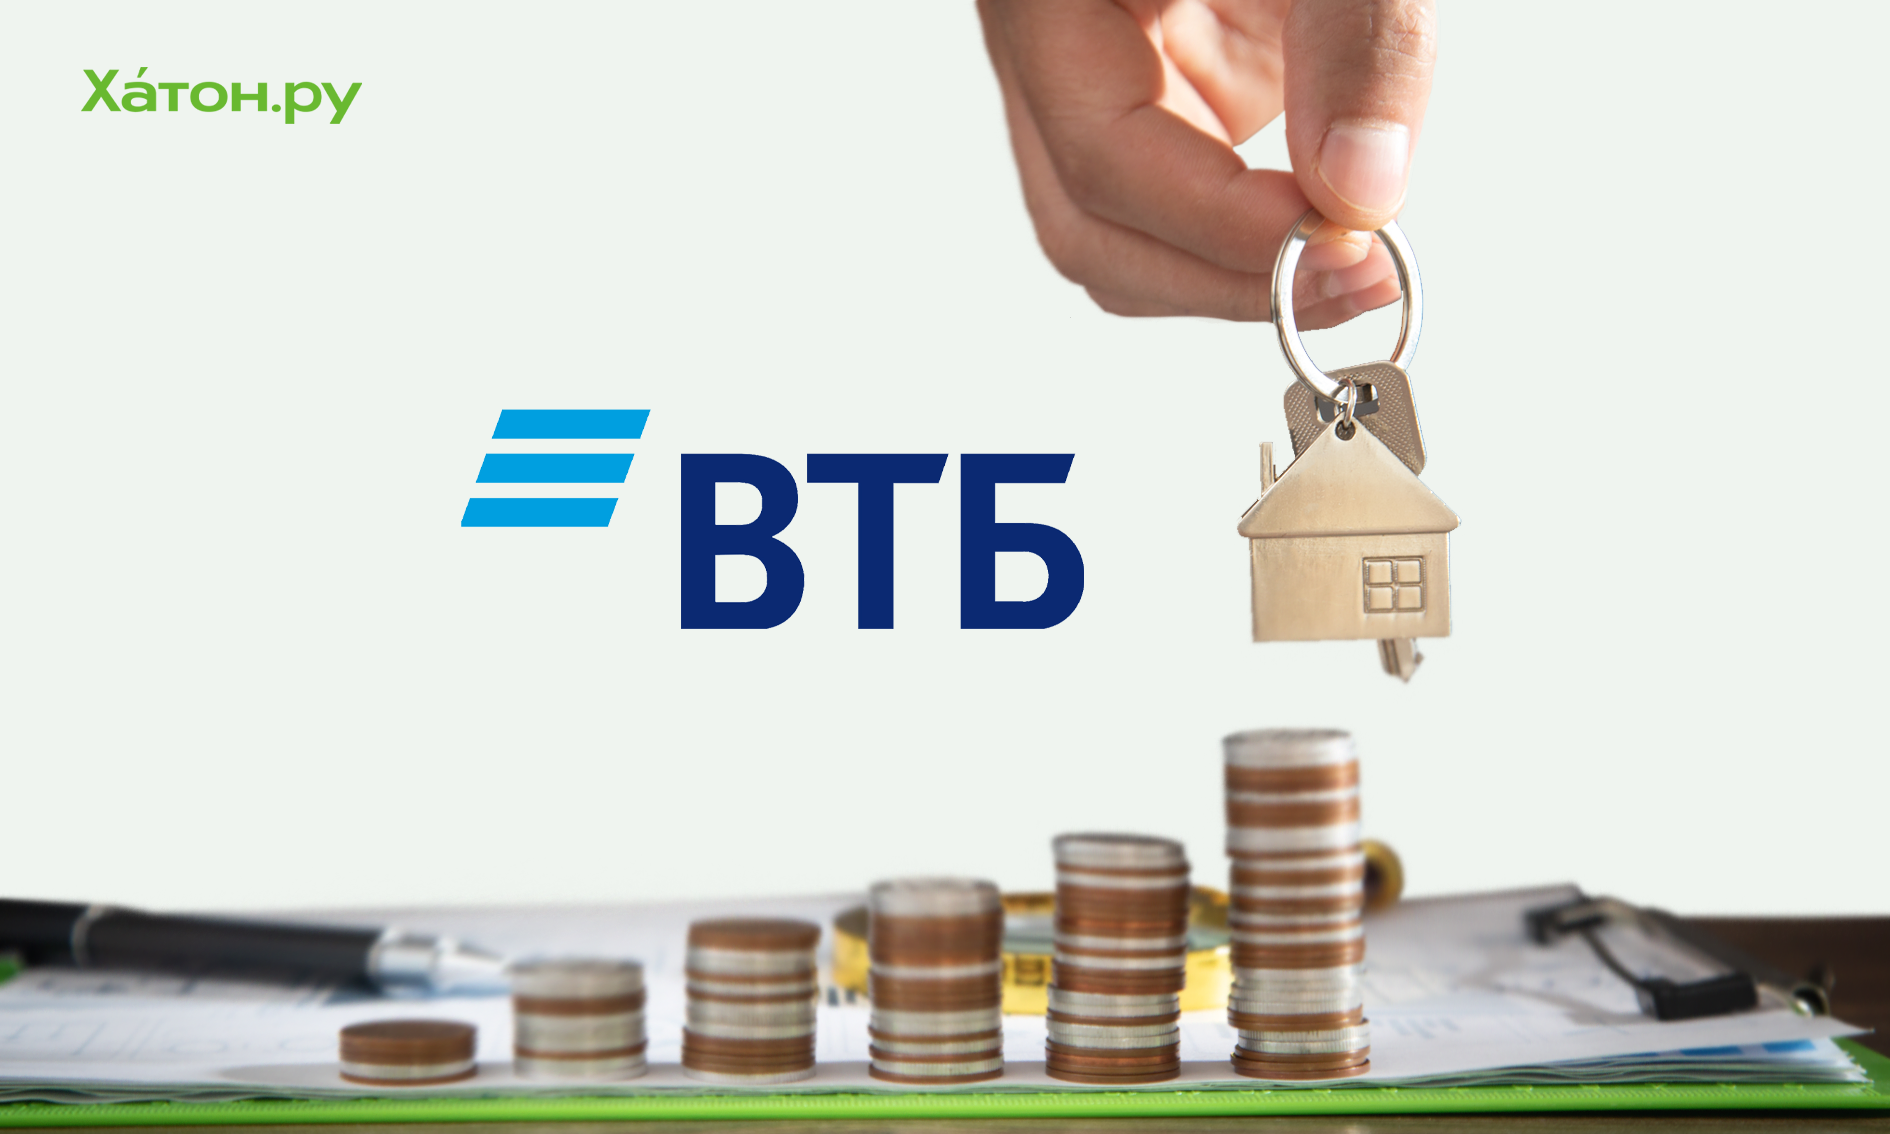 ВТБ снизил размер первого взноса по ипотеке до 15%